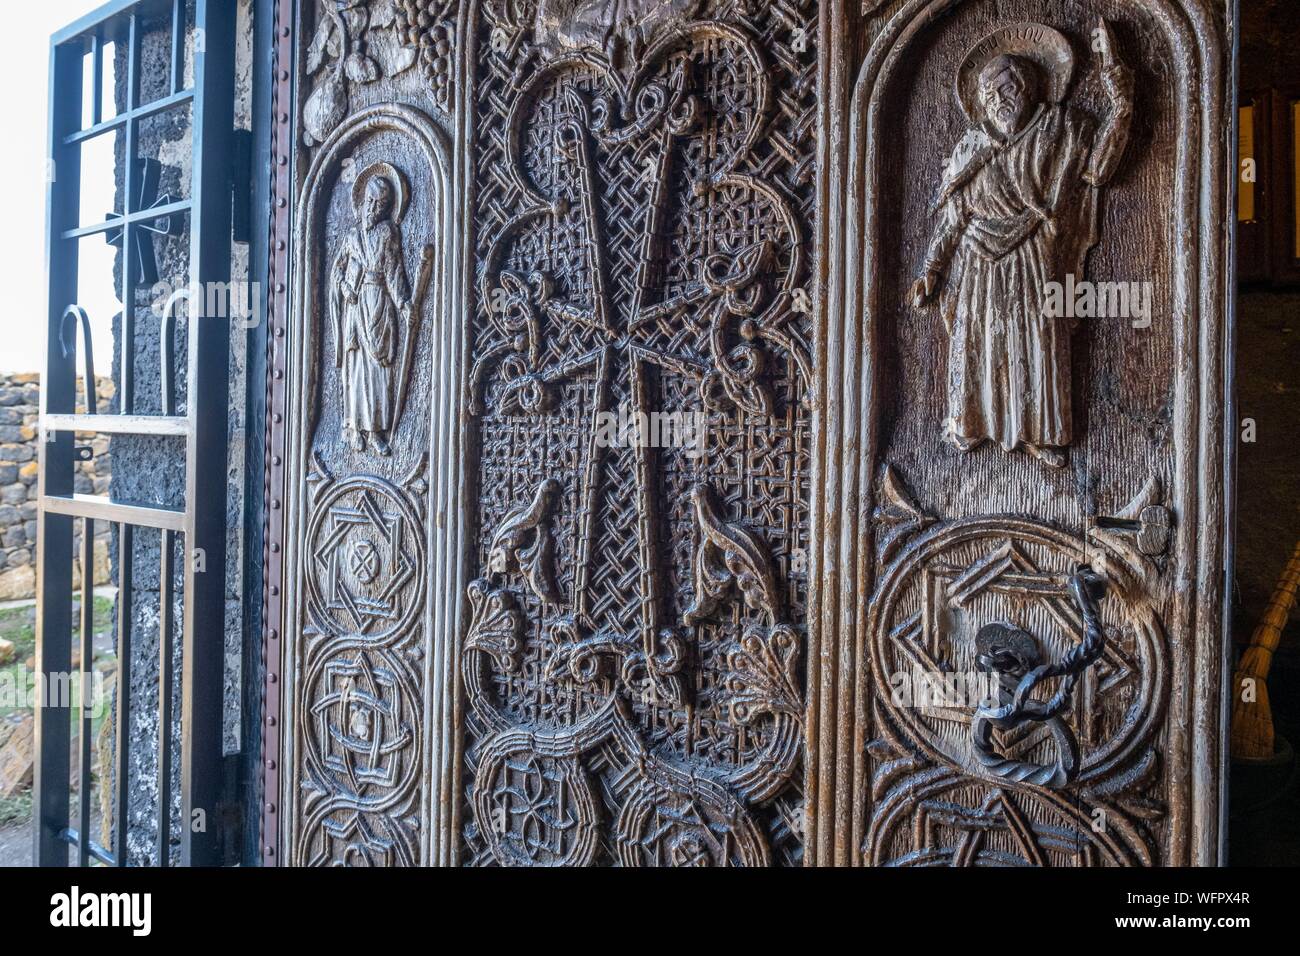 Armenia, Gegharkunik region, Sevan, Sevanavank monastery on the banks of Sevan lake, detail of the door of Surp Astvatsatsin church Stock Photo